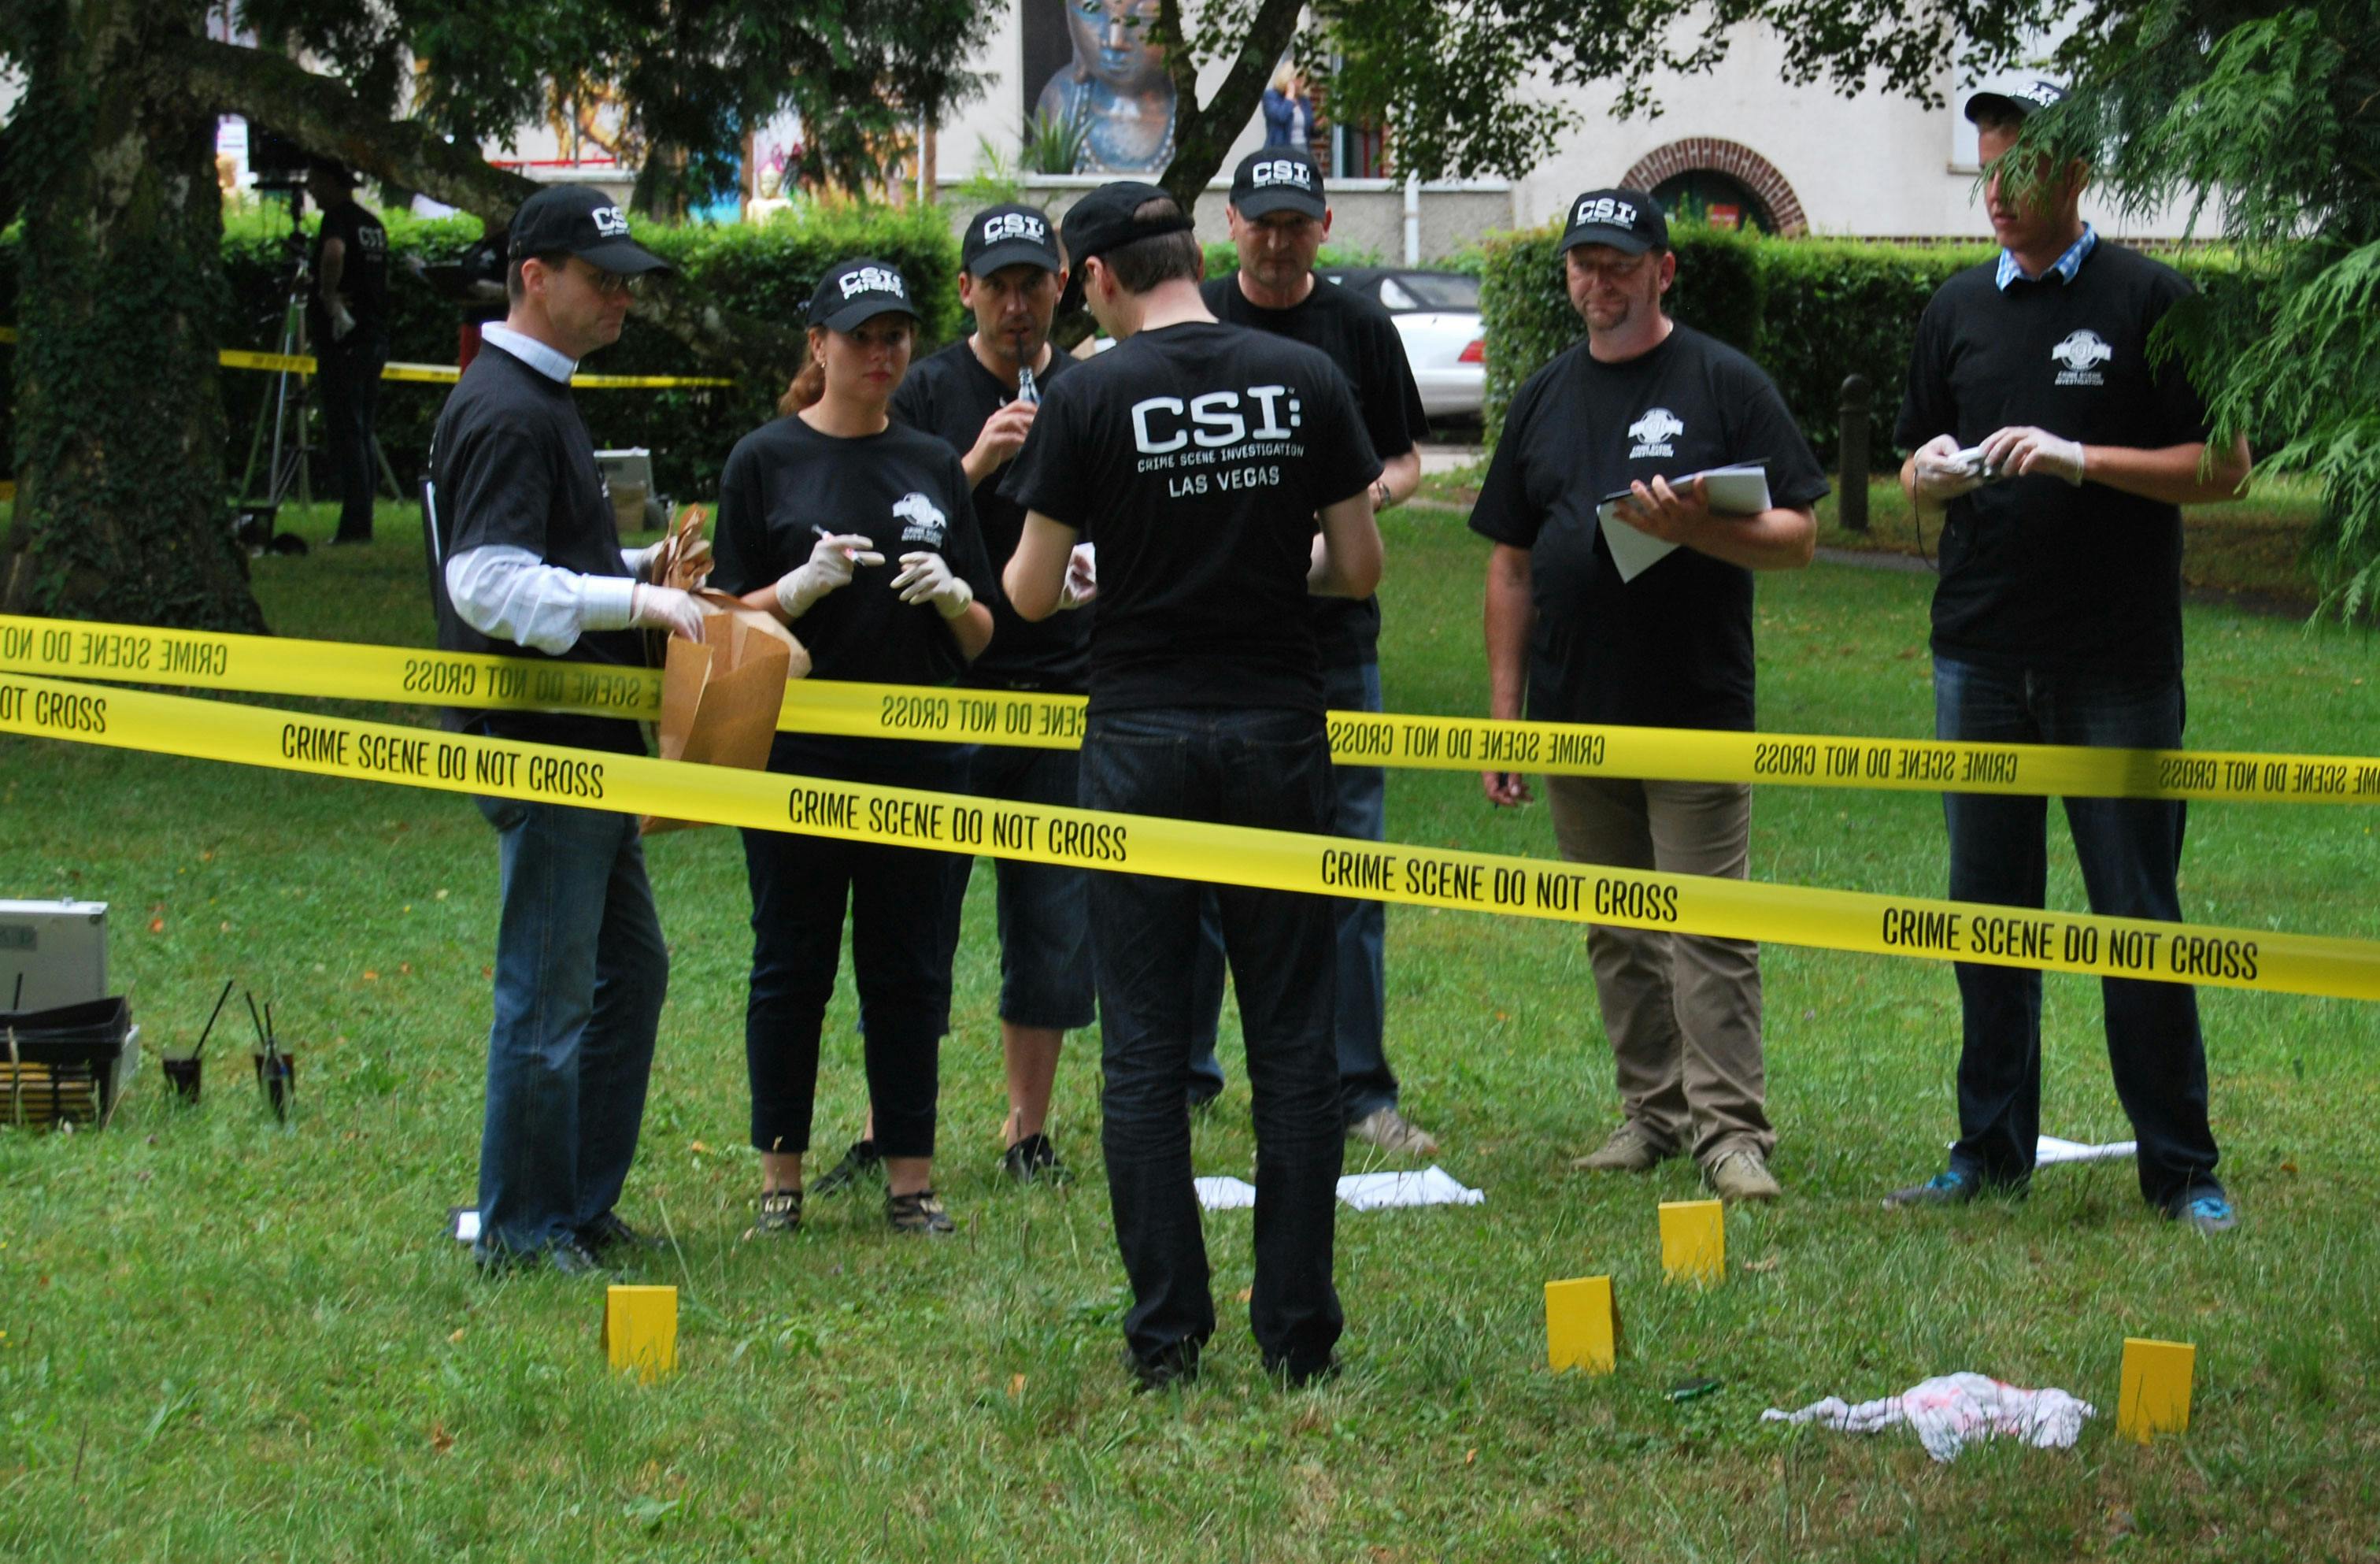 CSI Ermittlung | 5 Stunden Verbrechensaufklärung